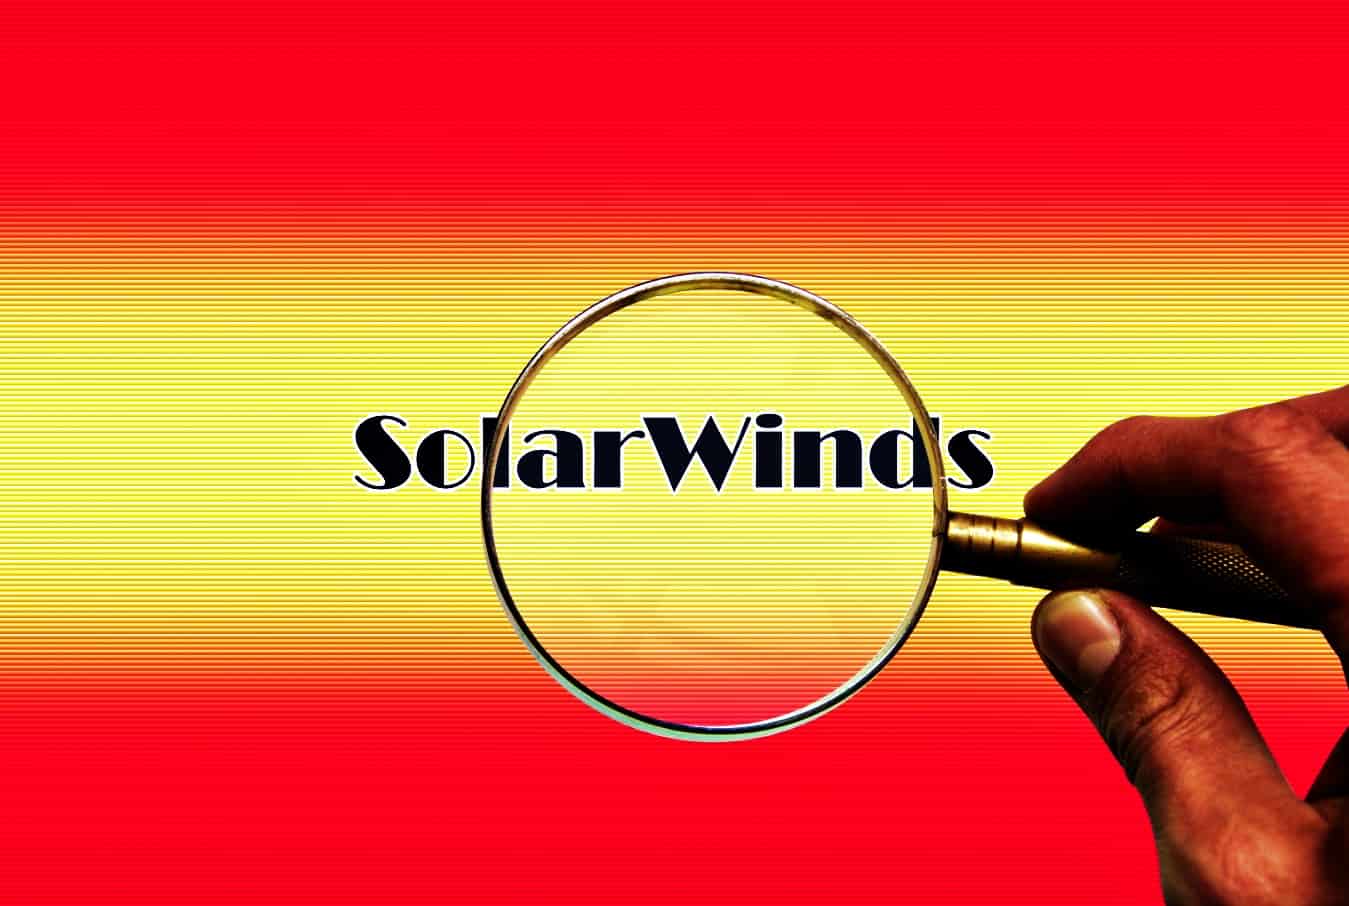 Microsoft release open-source queries to hunt SolarWinds hacks